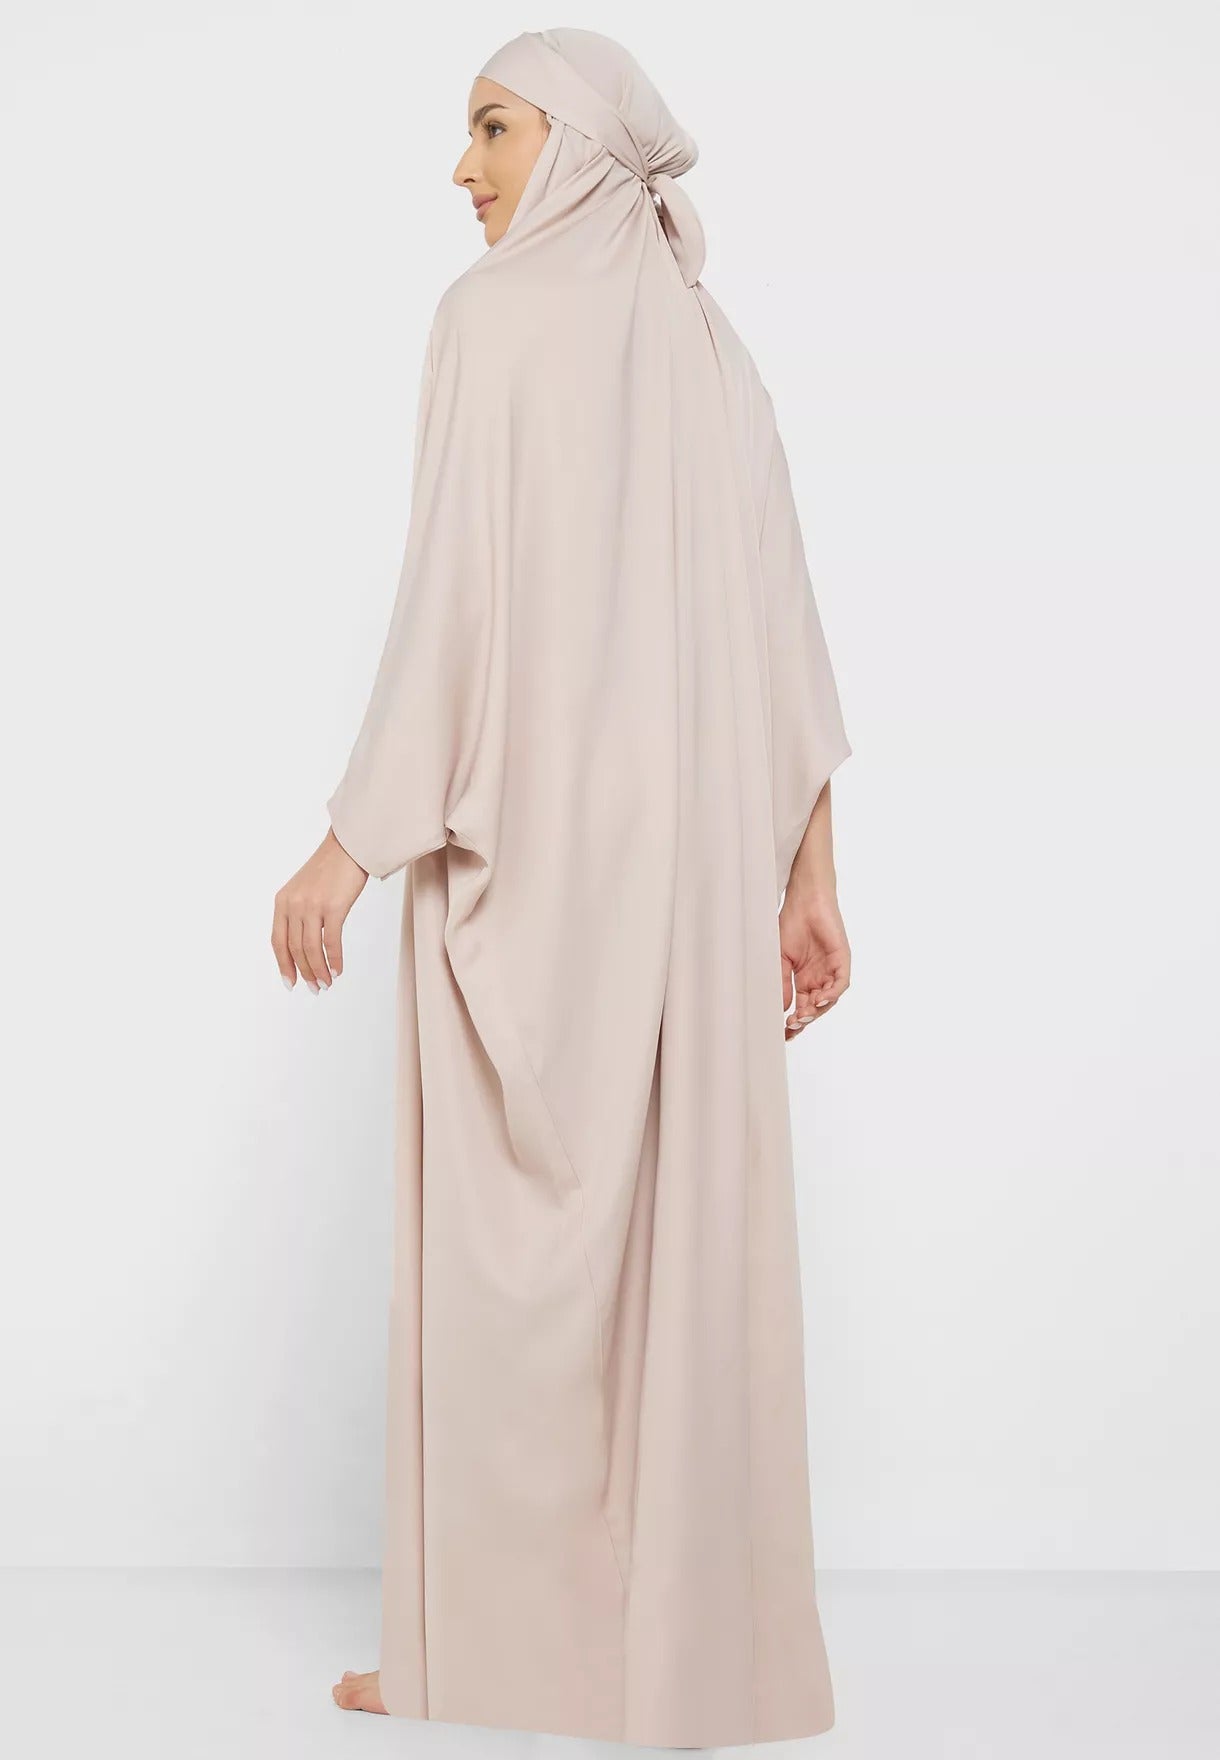 Premium full coverage islamic clothing-N12P-N12P